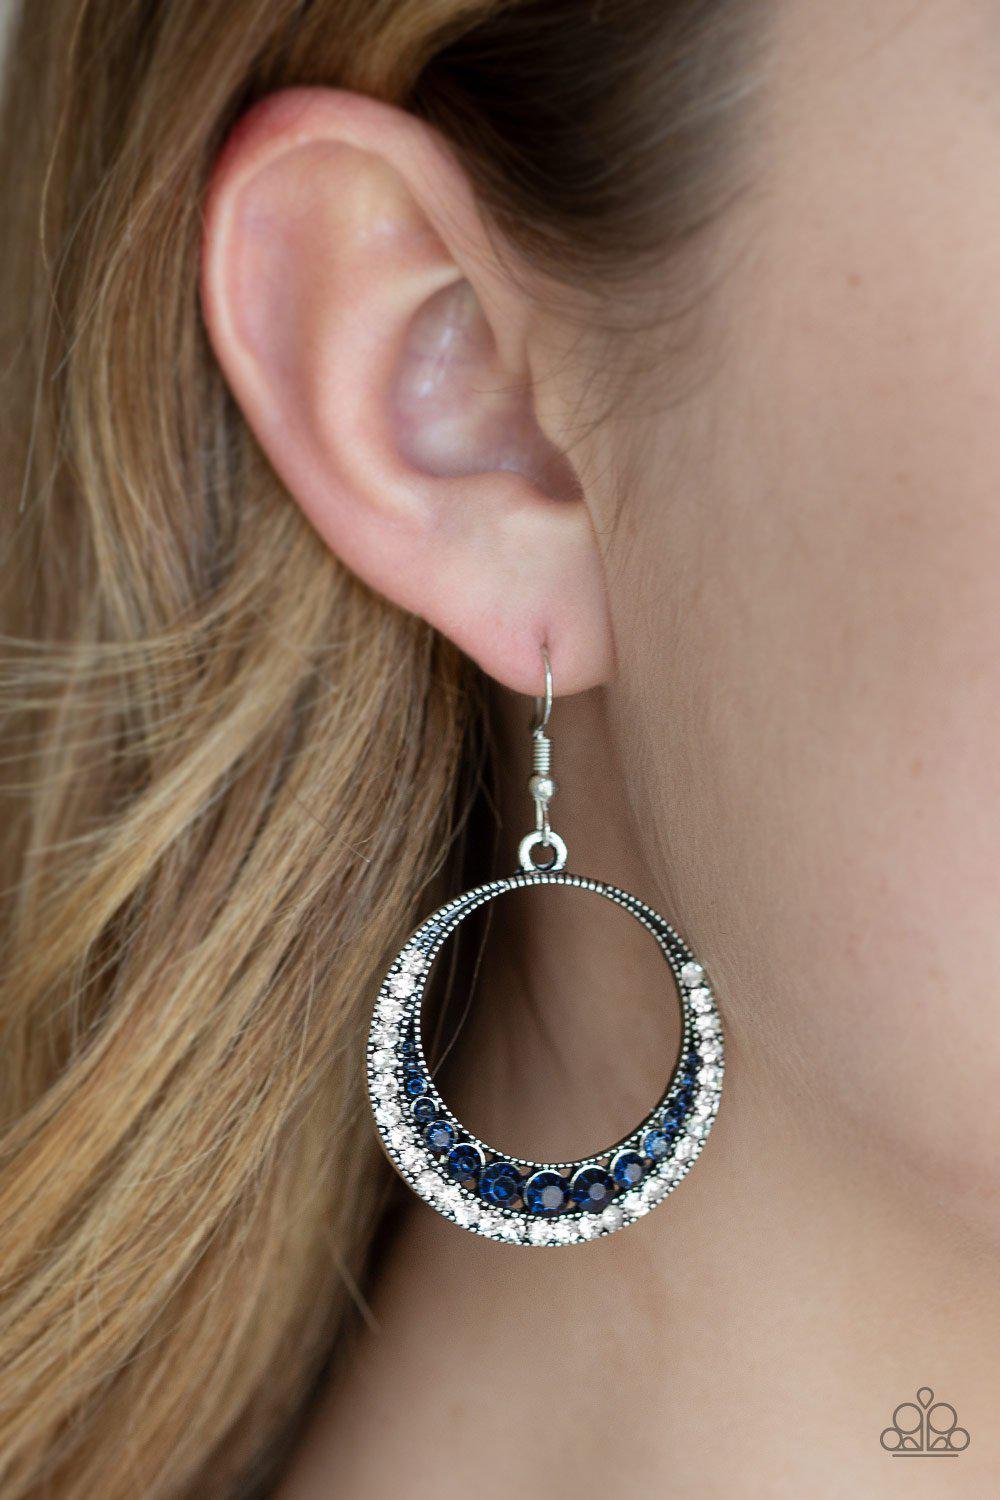 Demanding Dazzle Blue Rhinestone Earrings - Paparazzi Accessories-CarasShop.com - $5 Jewelry by Cara Jewels